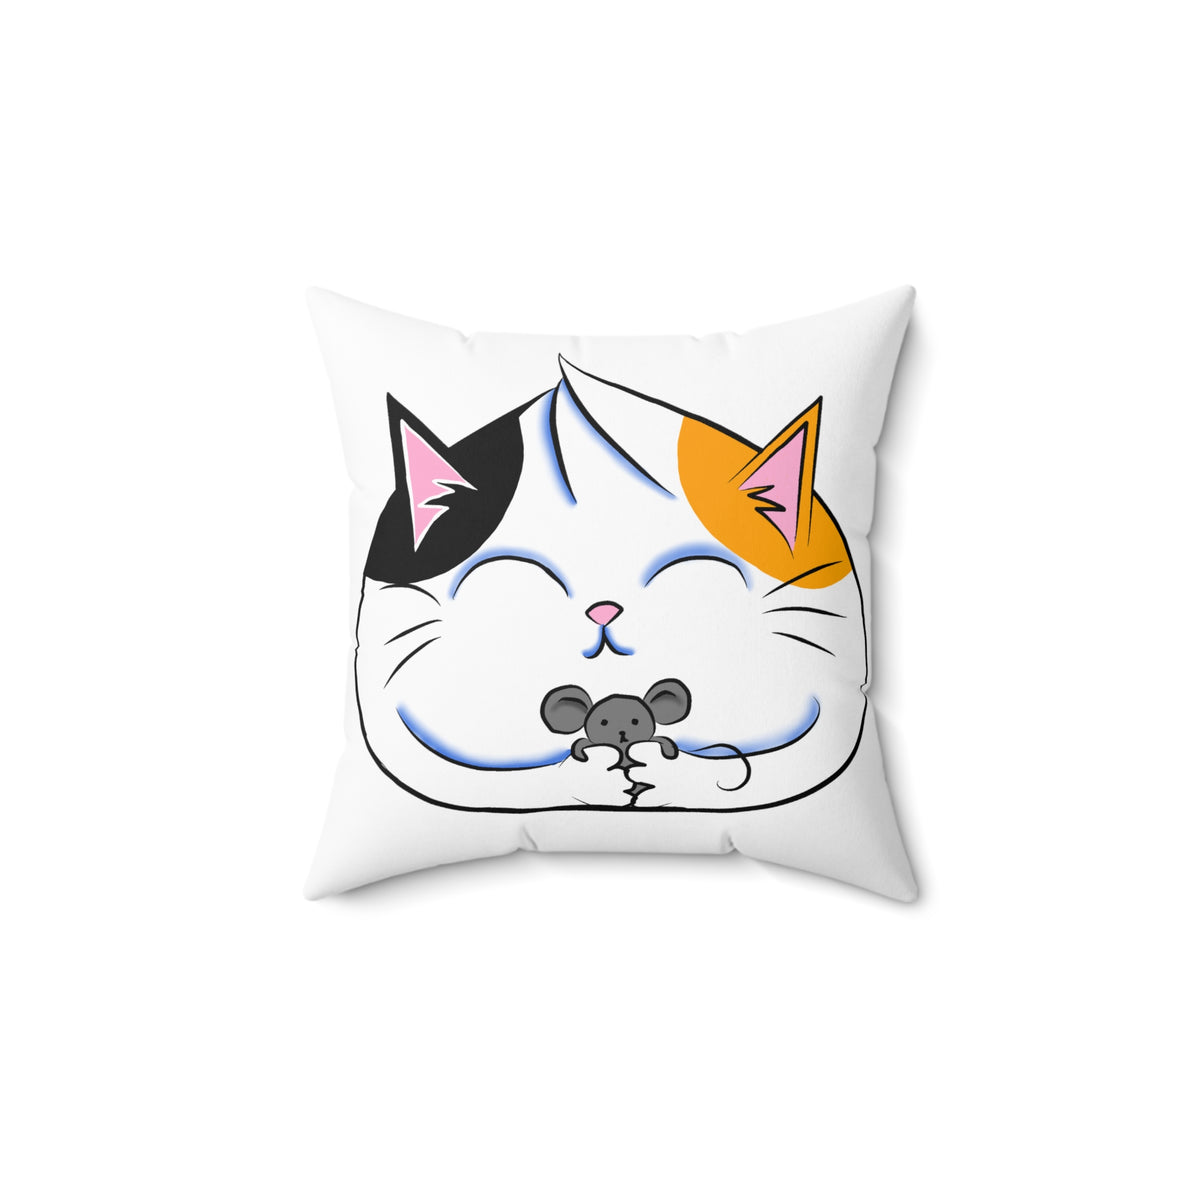 Adorable Calico Cat Dumpling Spun Polyester Pillow with Gray Mouse